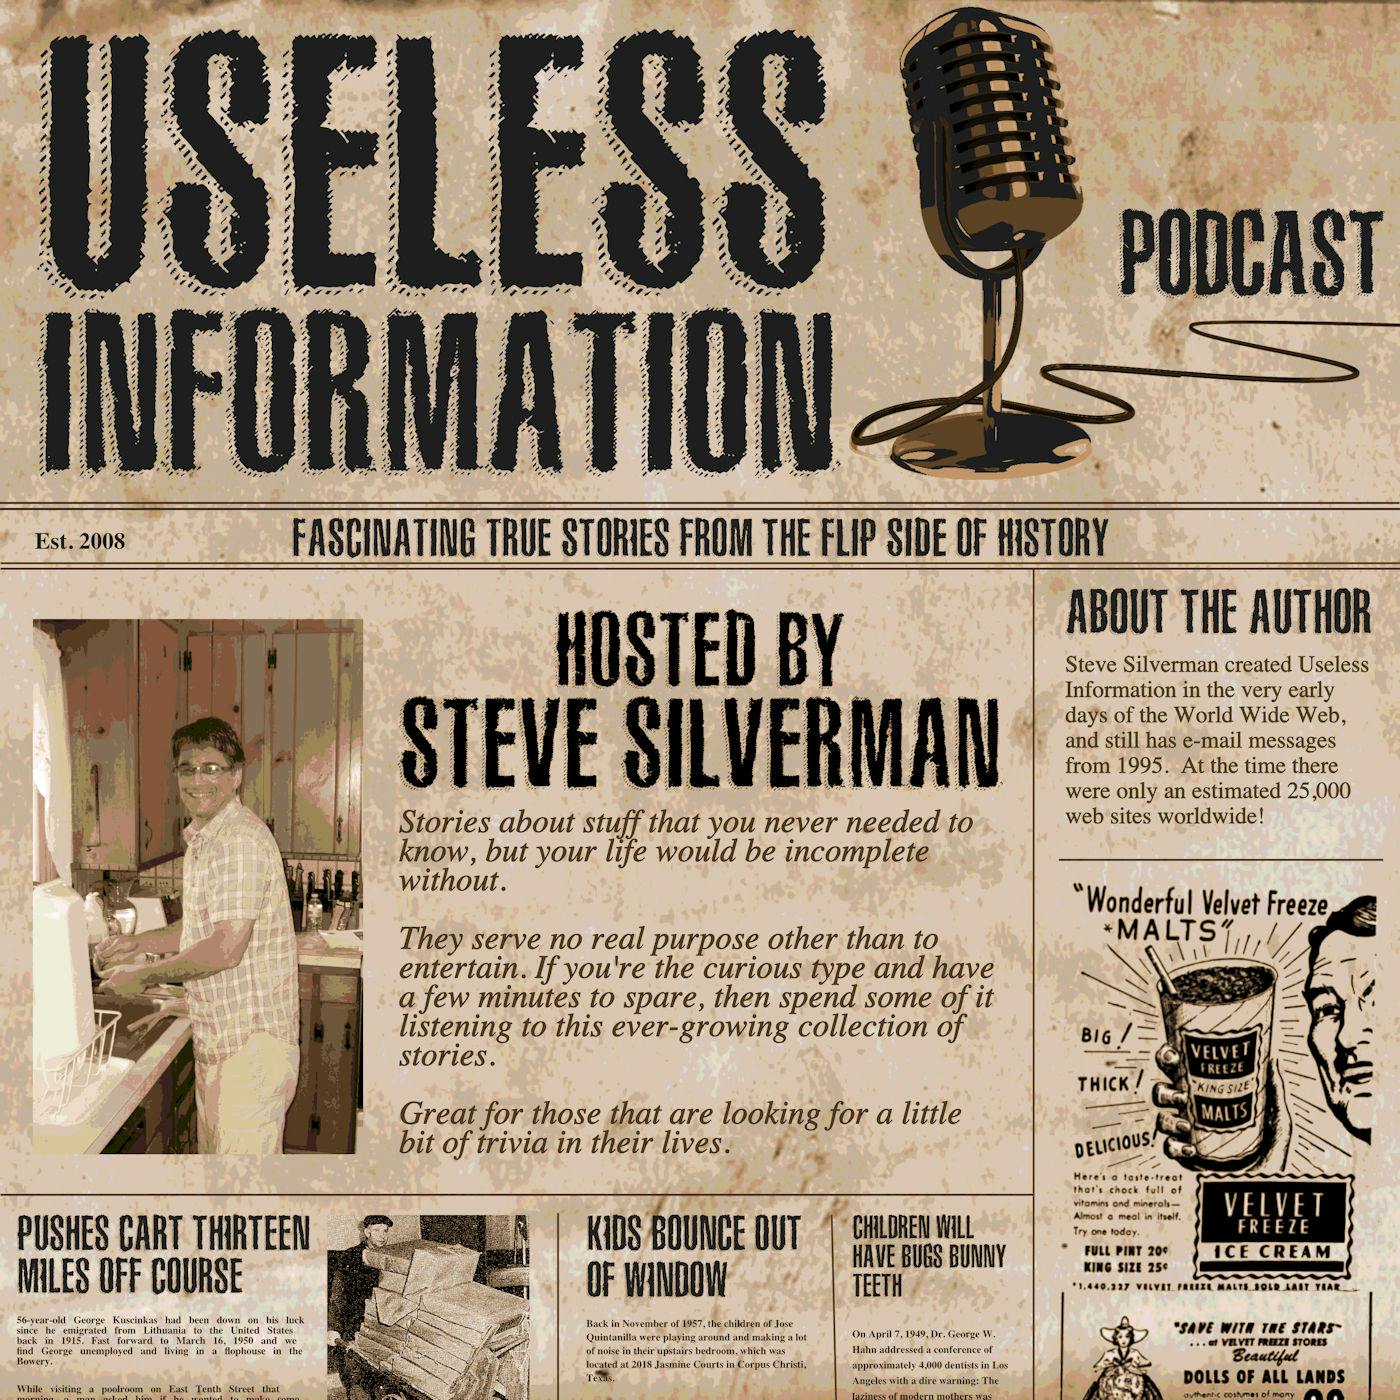 An Inside Job - UI Podcast #131